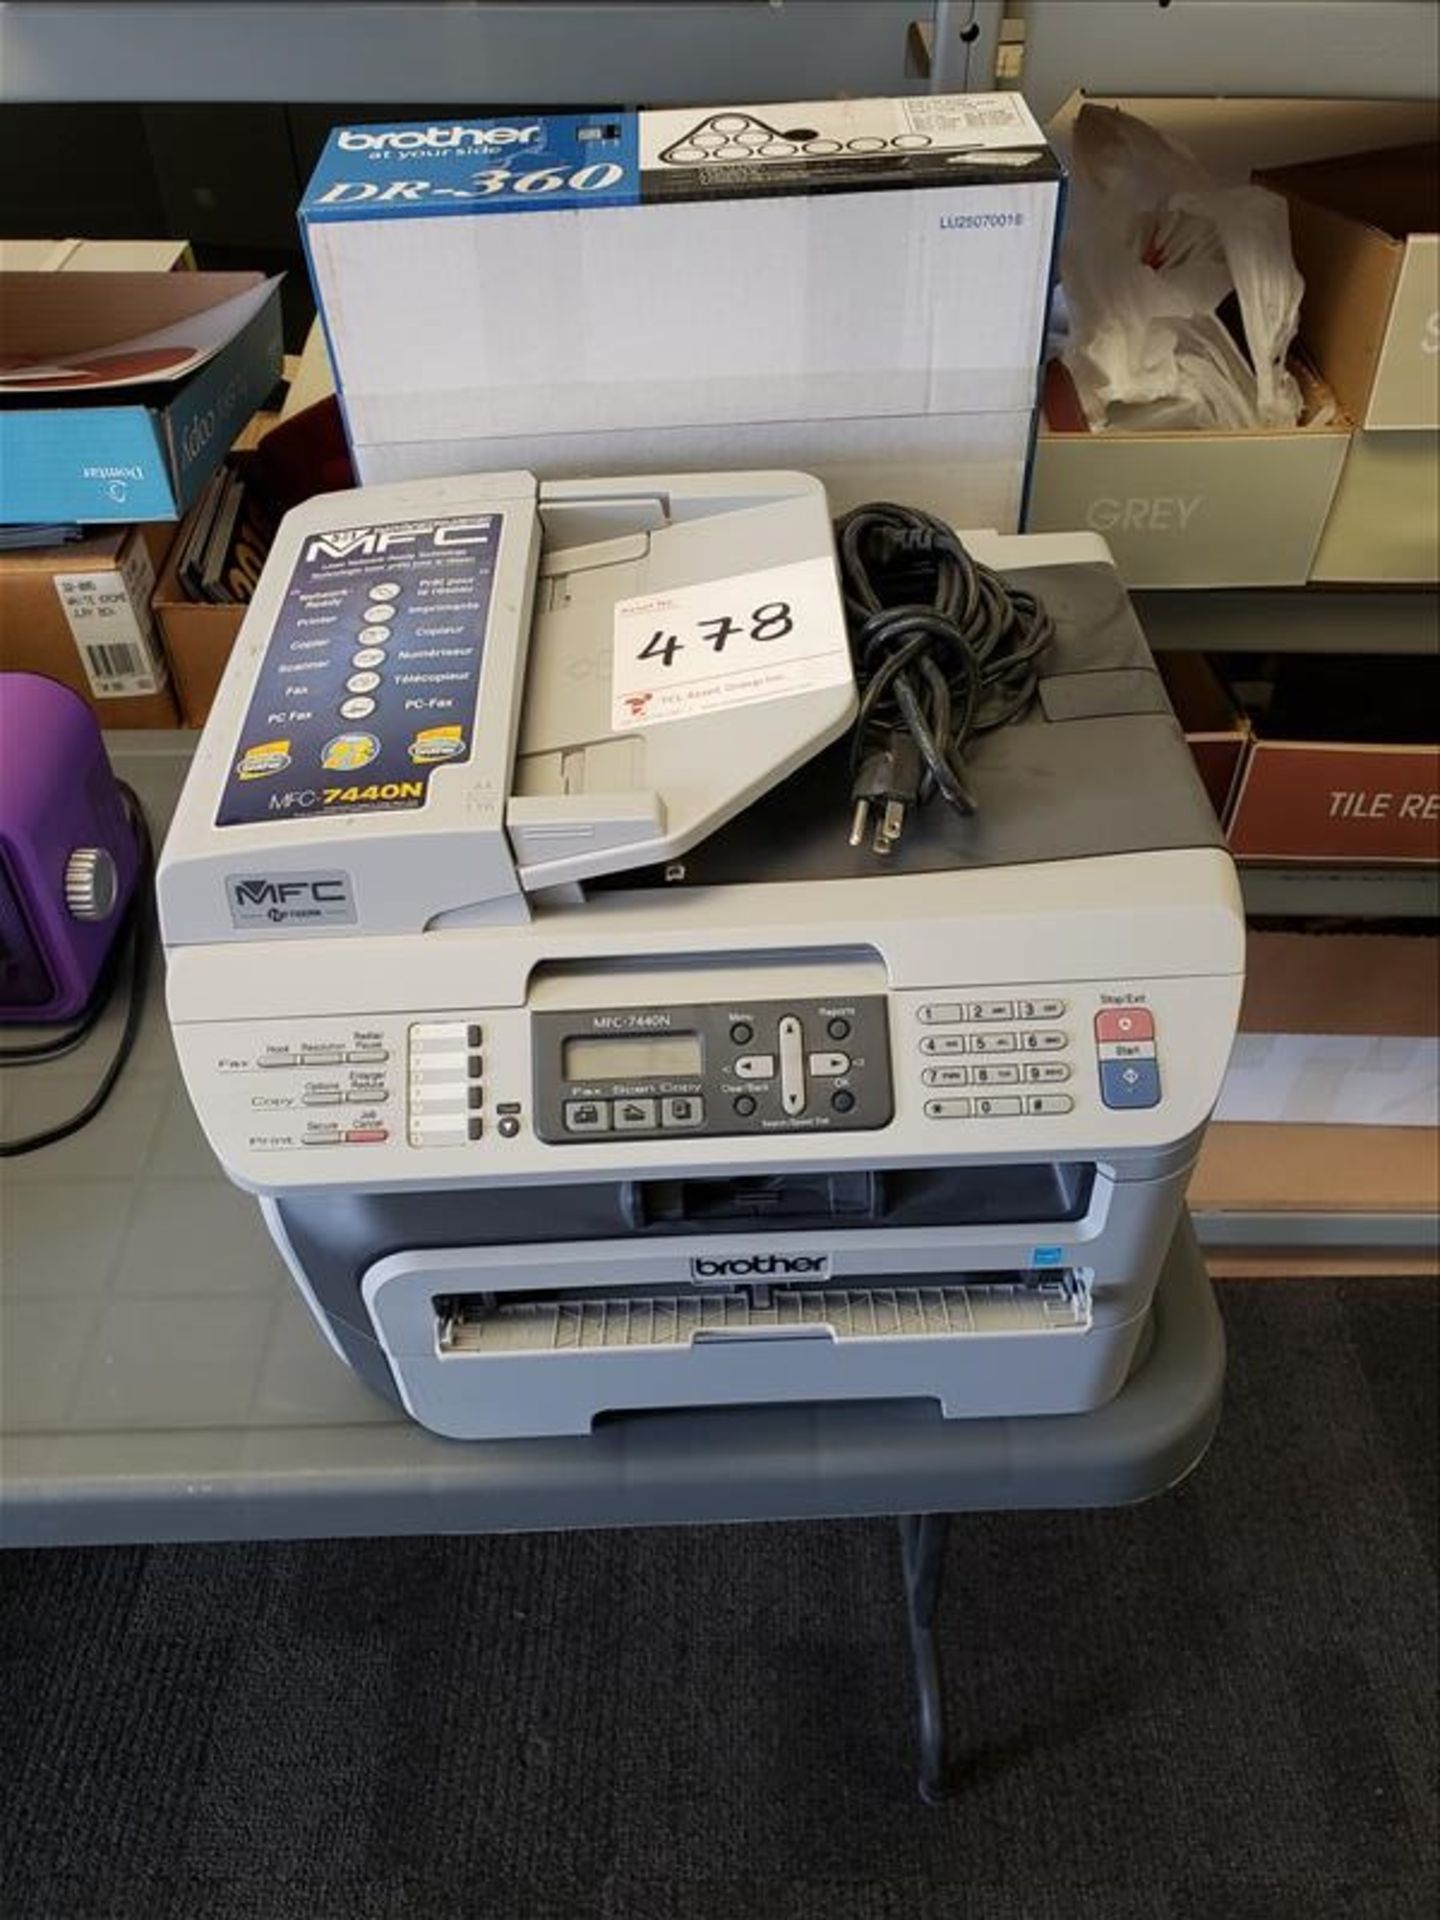 Brother MFC-7440N multi-function printer c/w toner